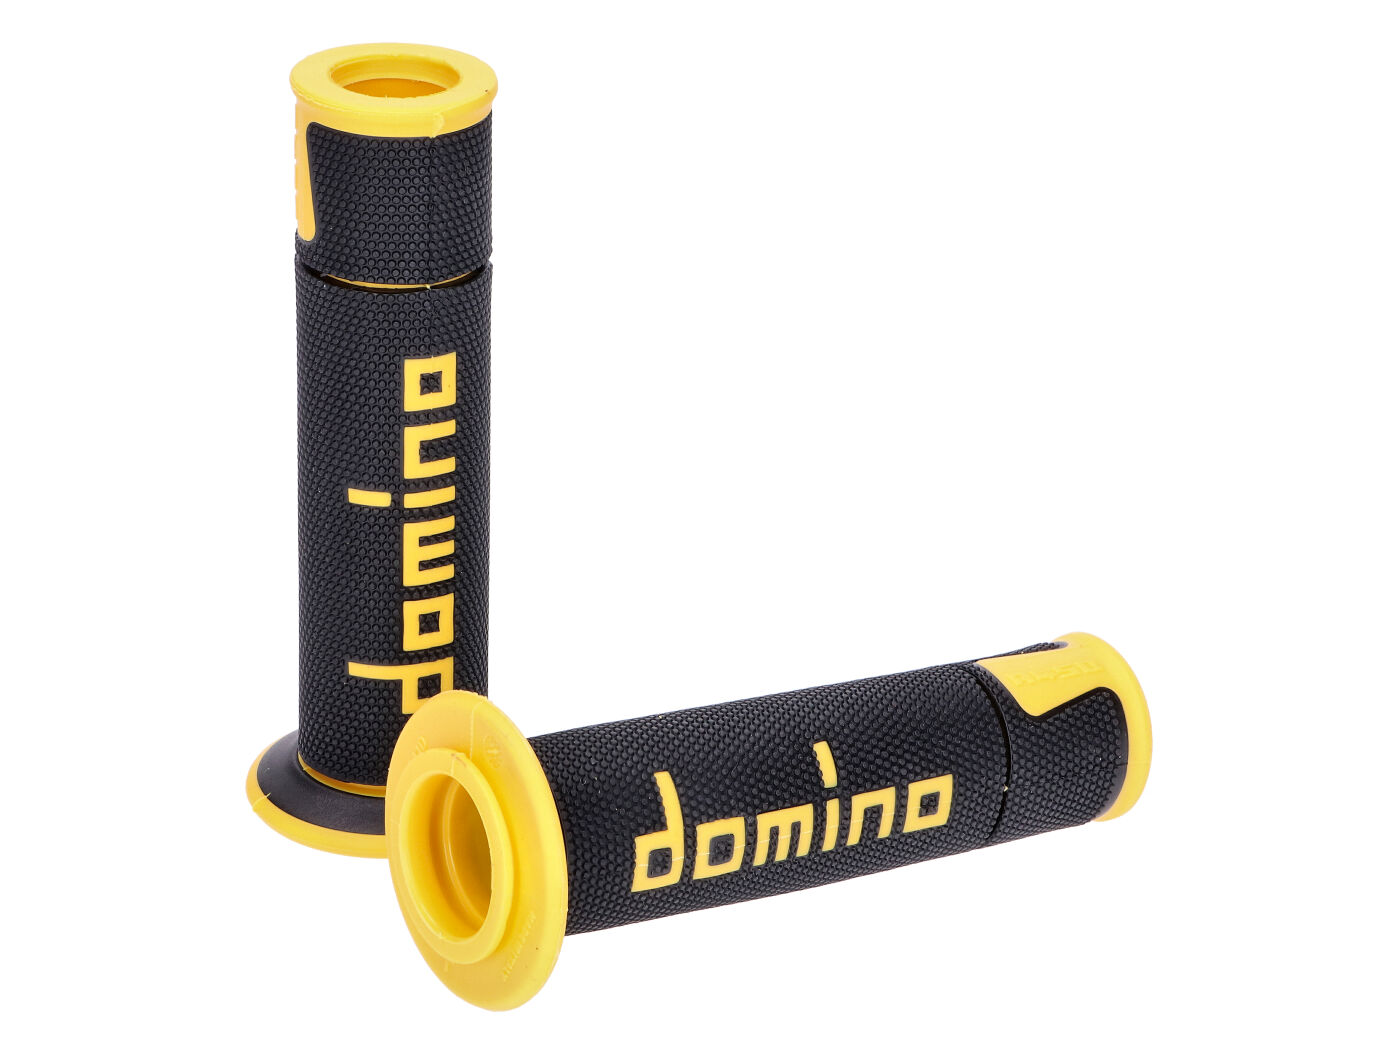 Domino A450 Racing Griffe, schwarz/gelb